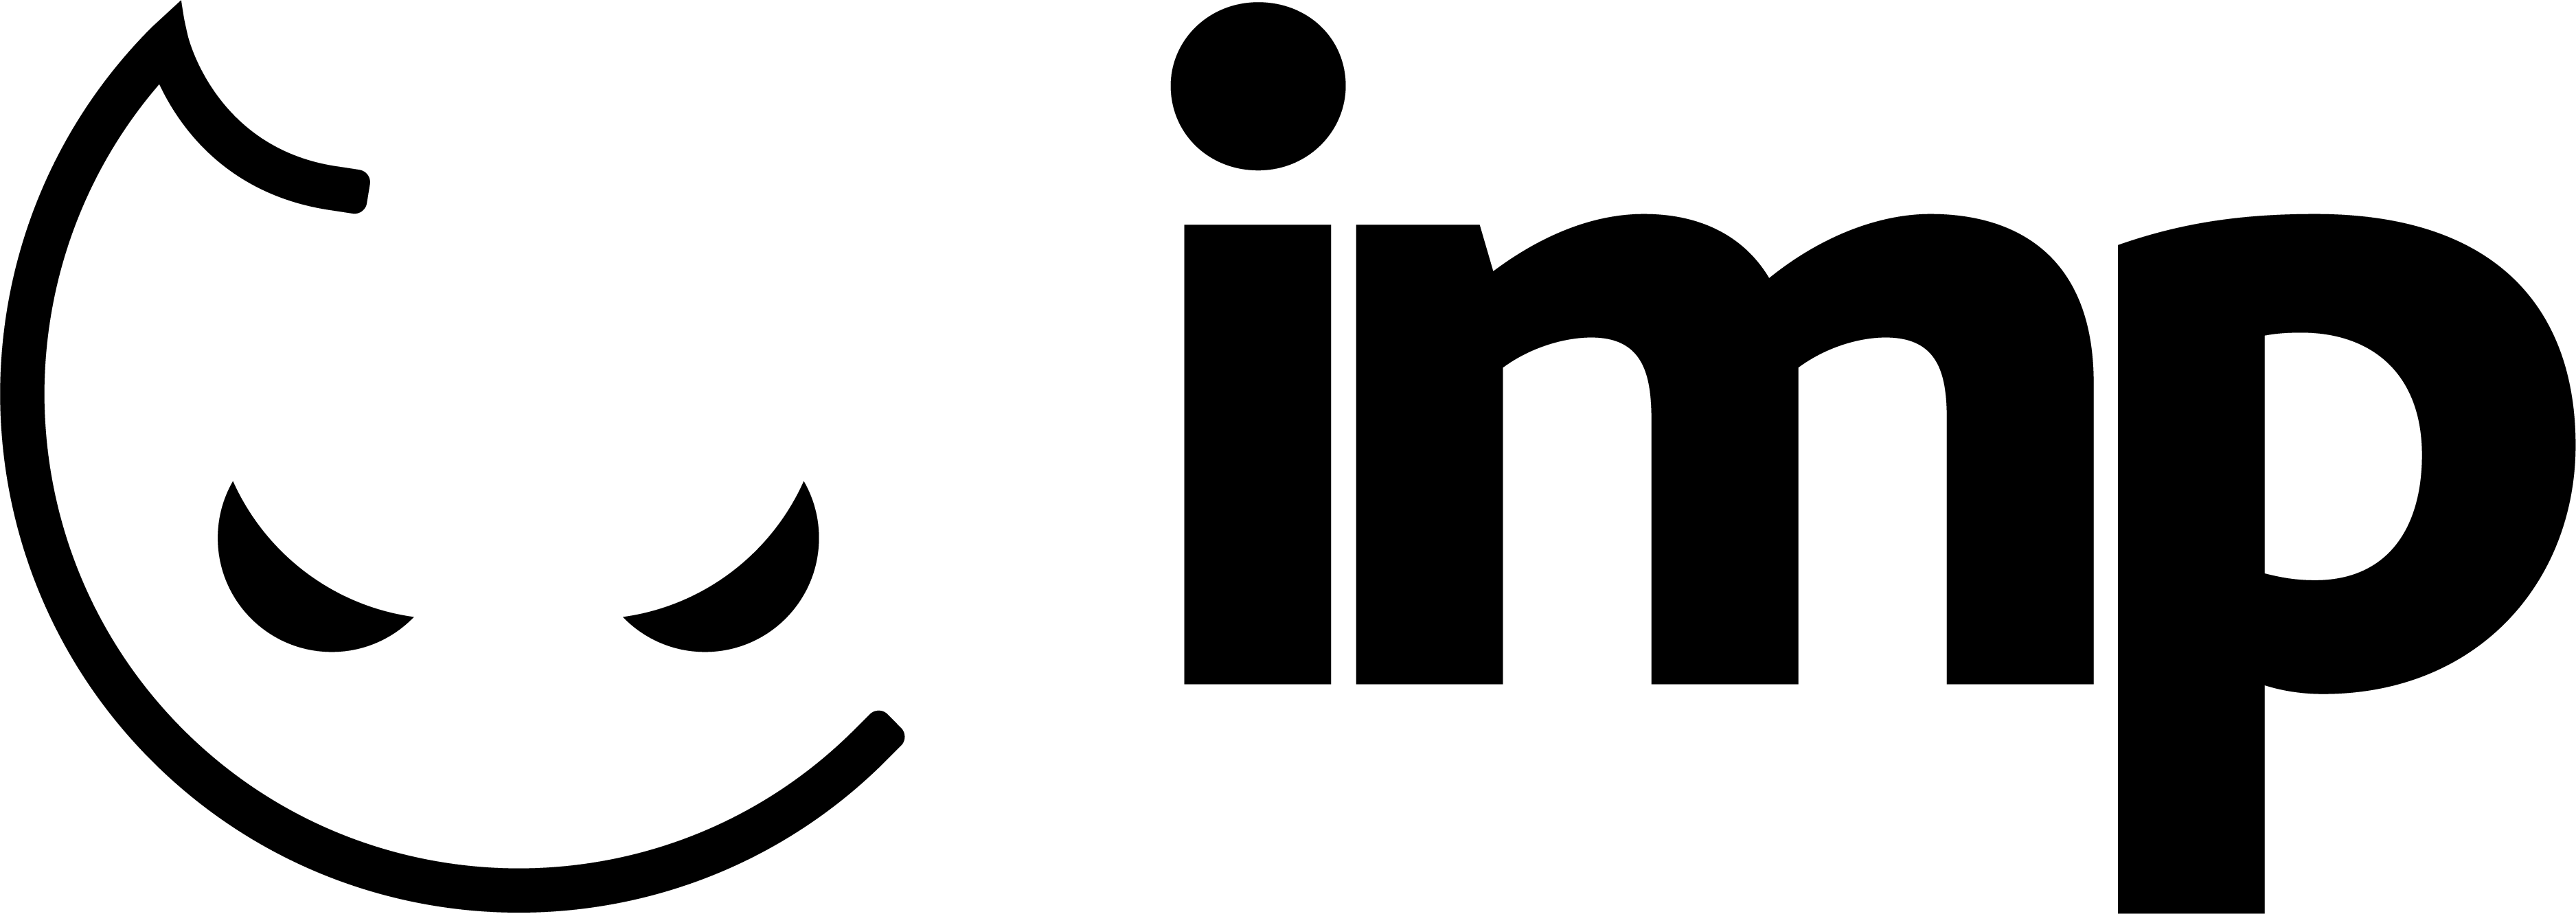 Igloo Immersive Media Player logo.